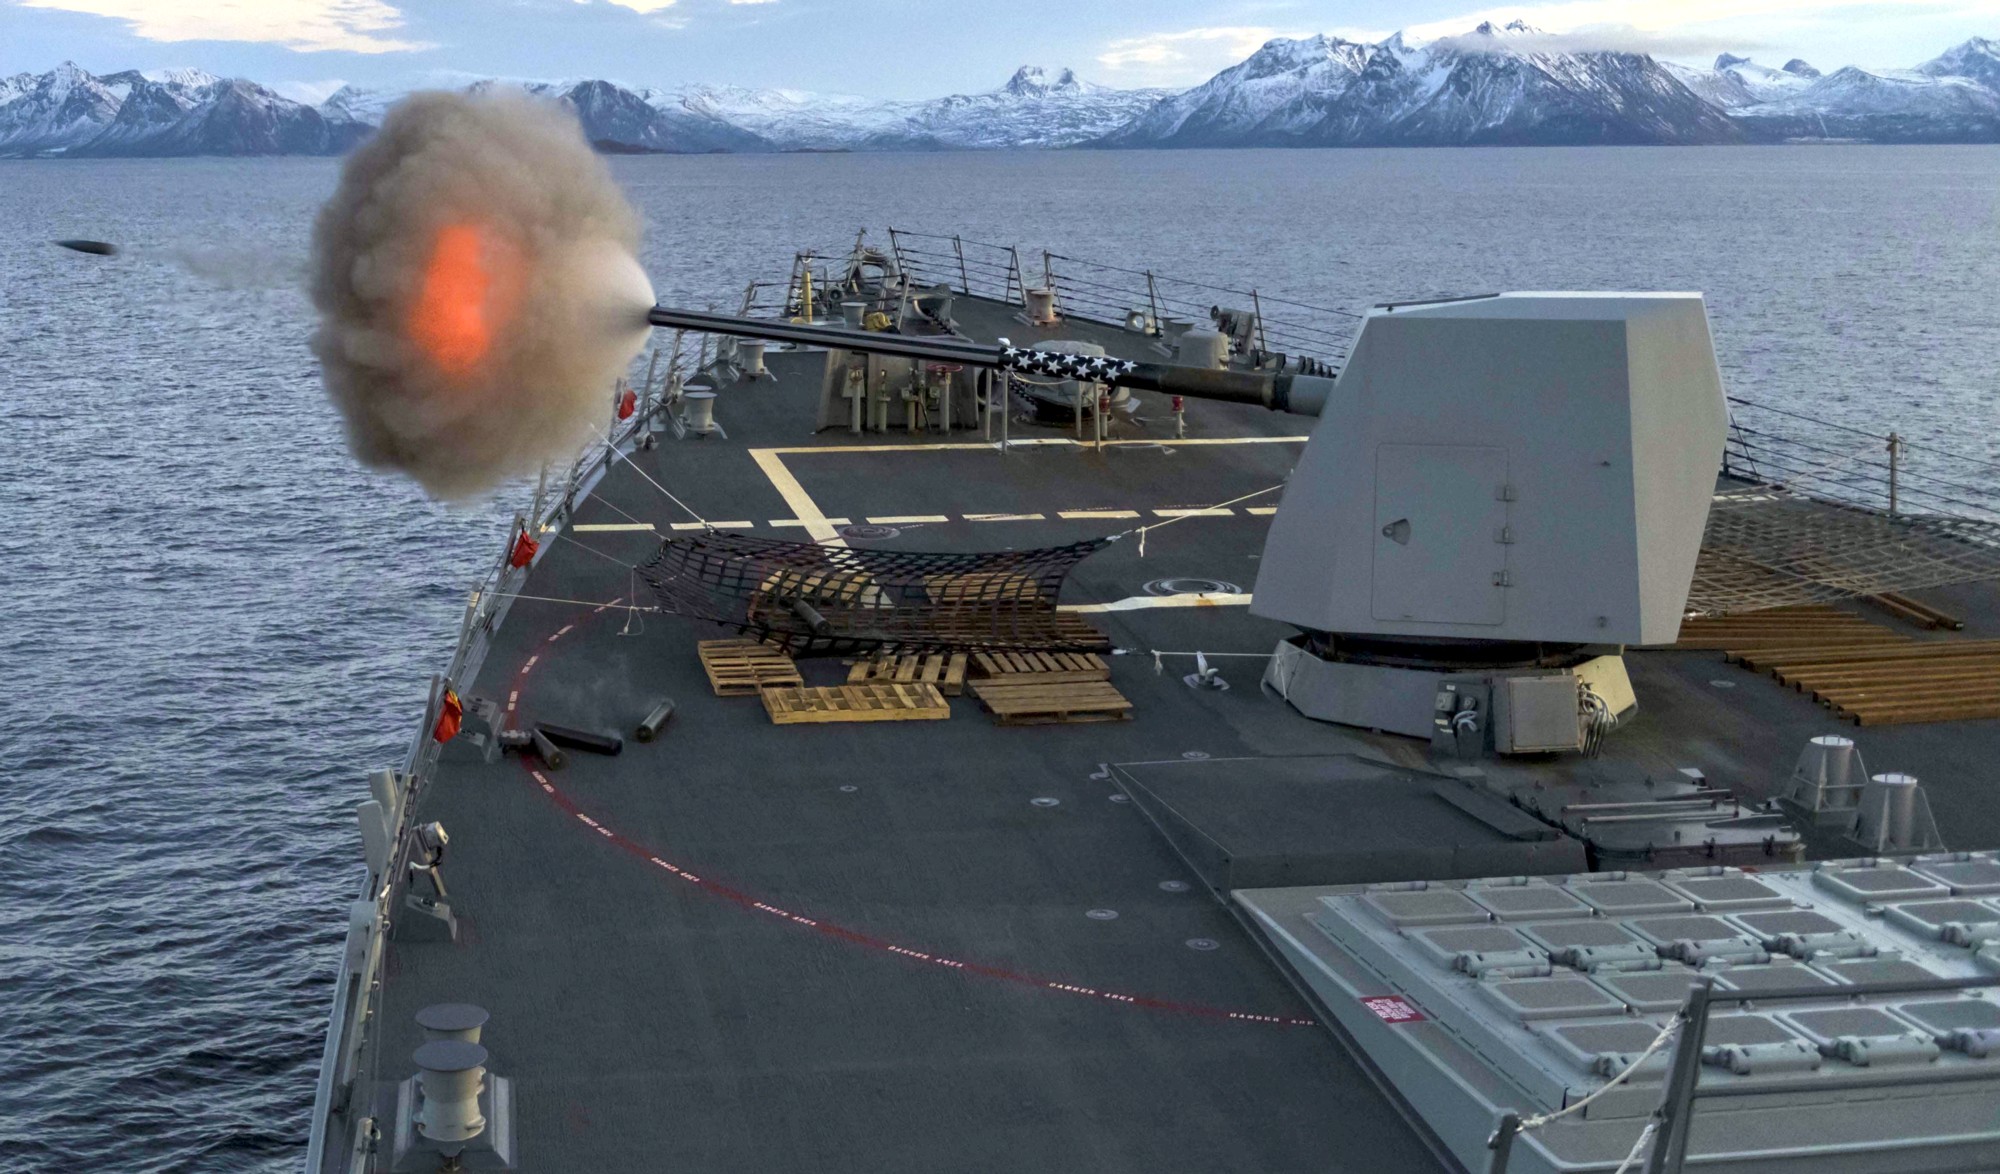 ddg-101 uss gridley arleigh burke class guided missile destroyer aegis us navy mk.45 gun fire norwegian sea 65